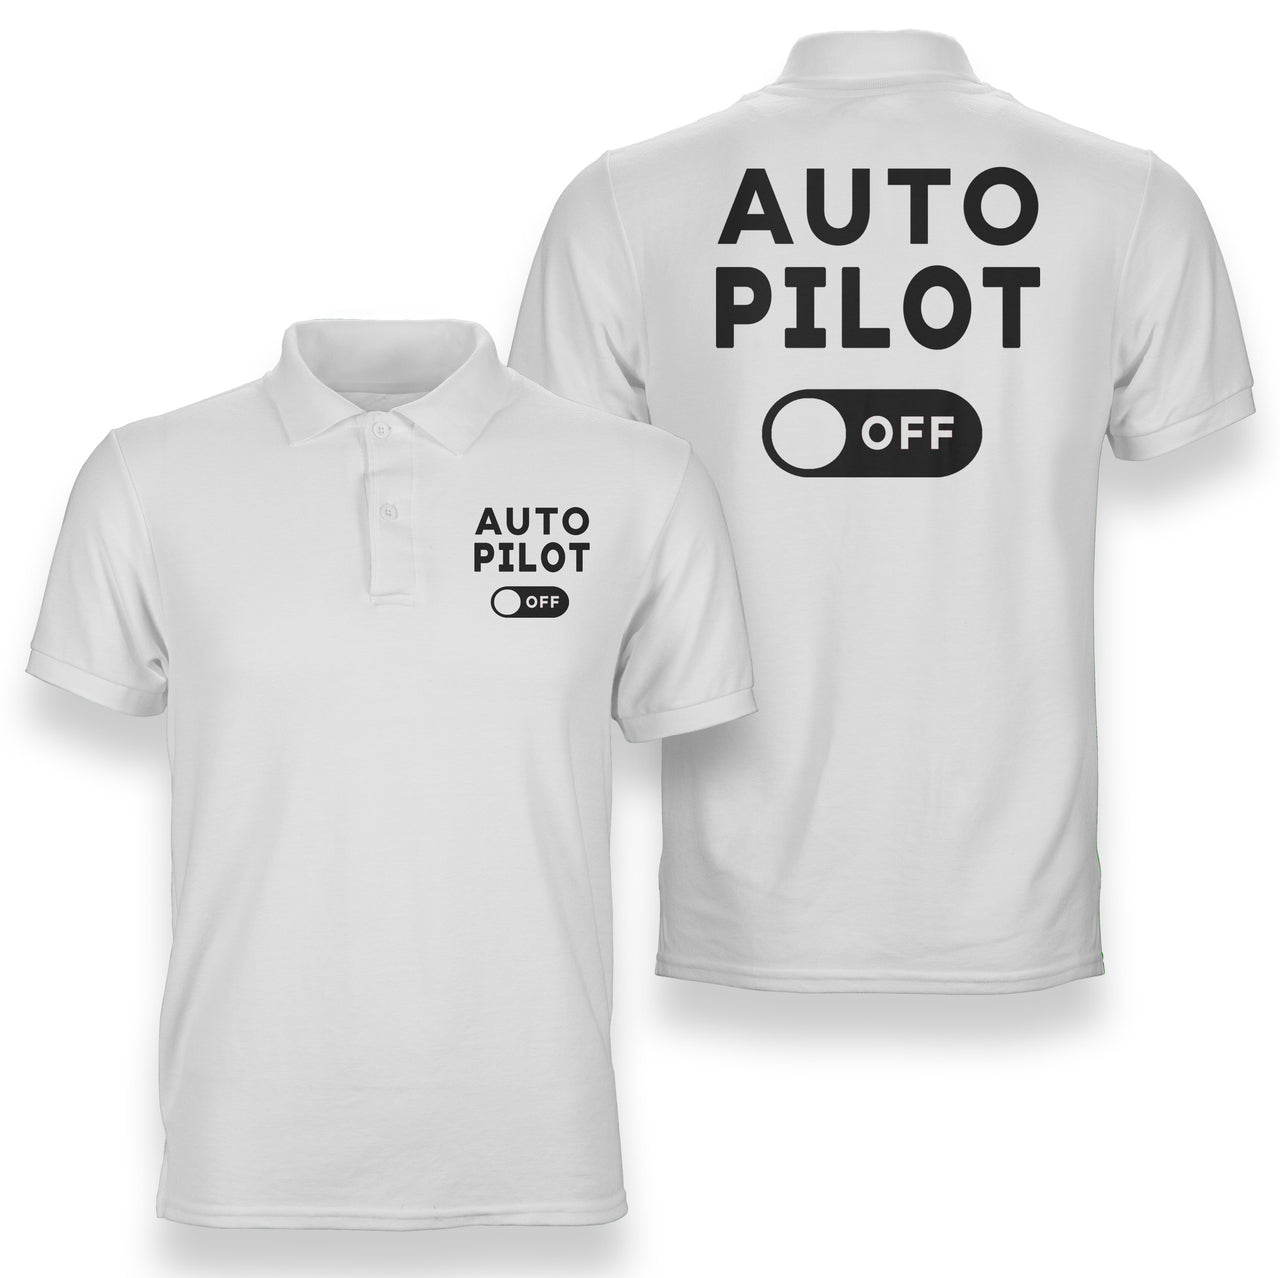 Auto Pilot Off Designed Double Side Polo T-Shirts